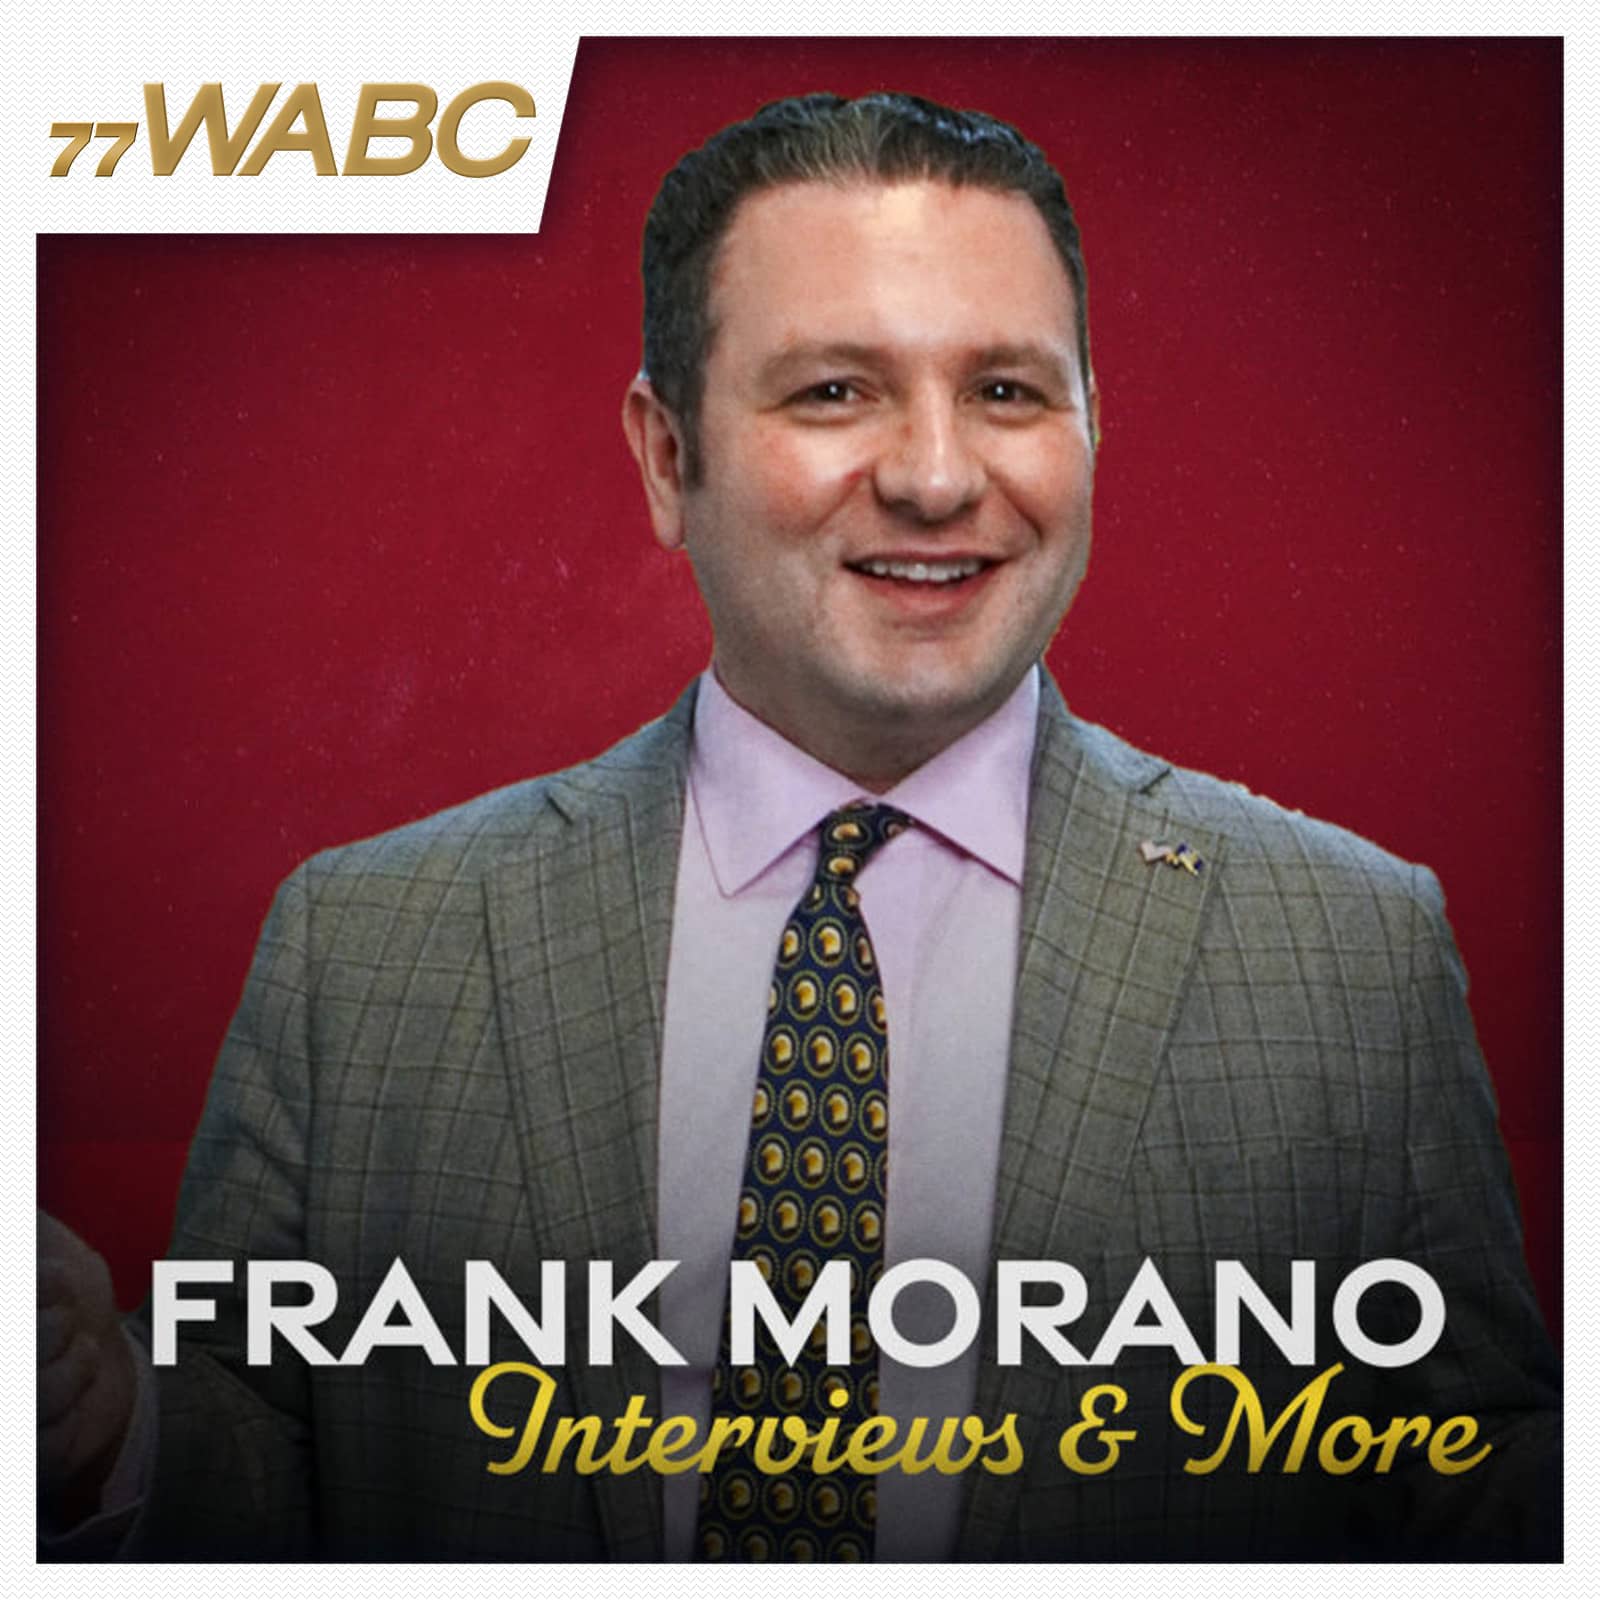 frank-morano-interviews-and-more-podcast-new-logo-313